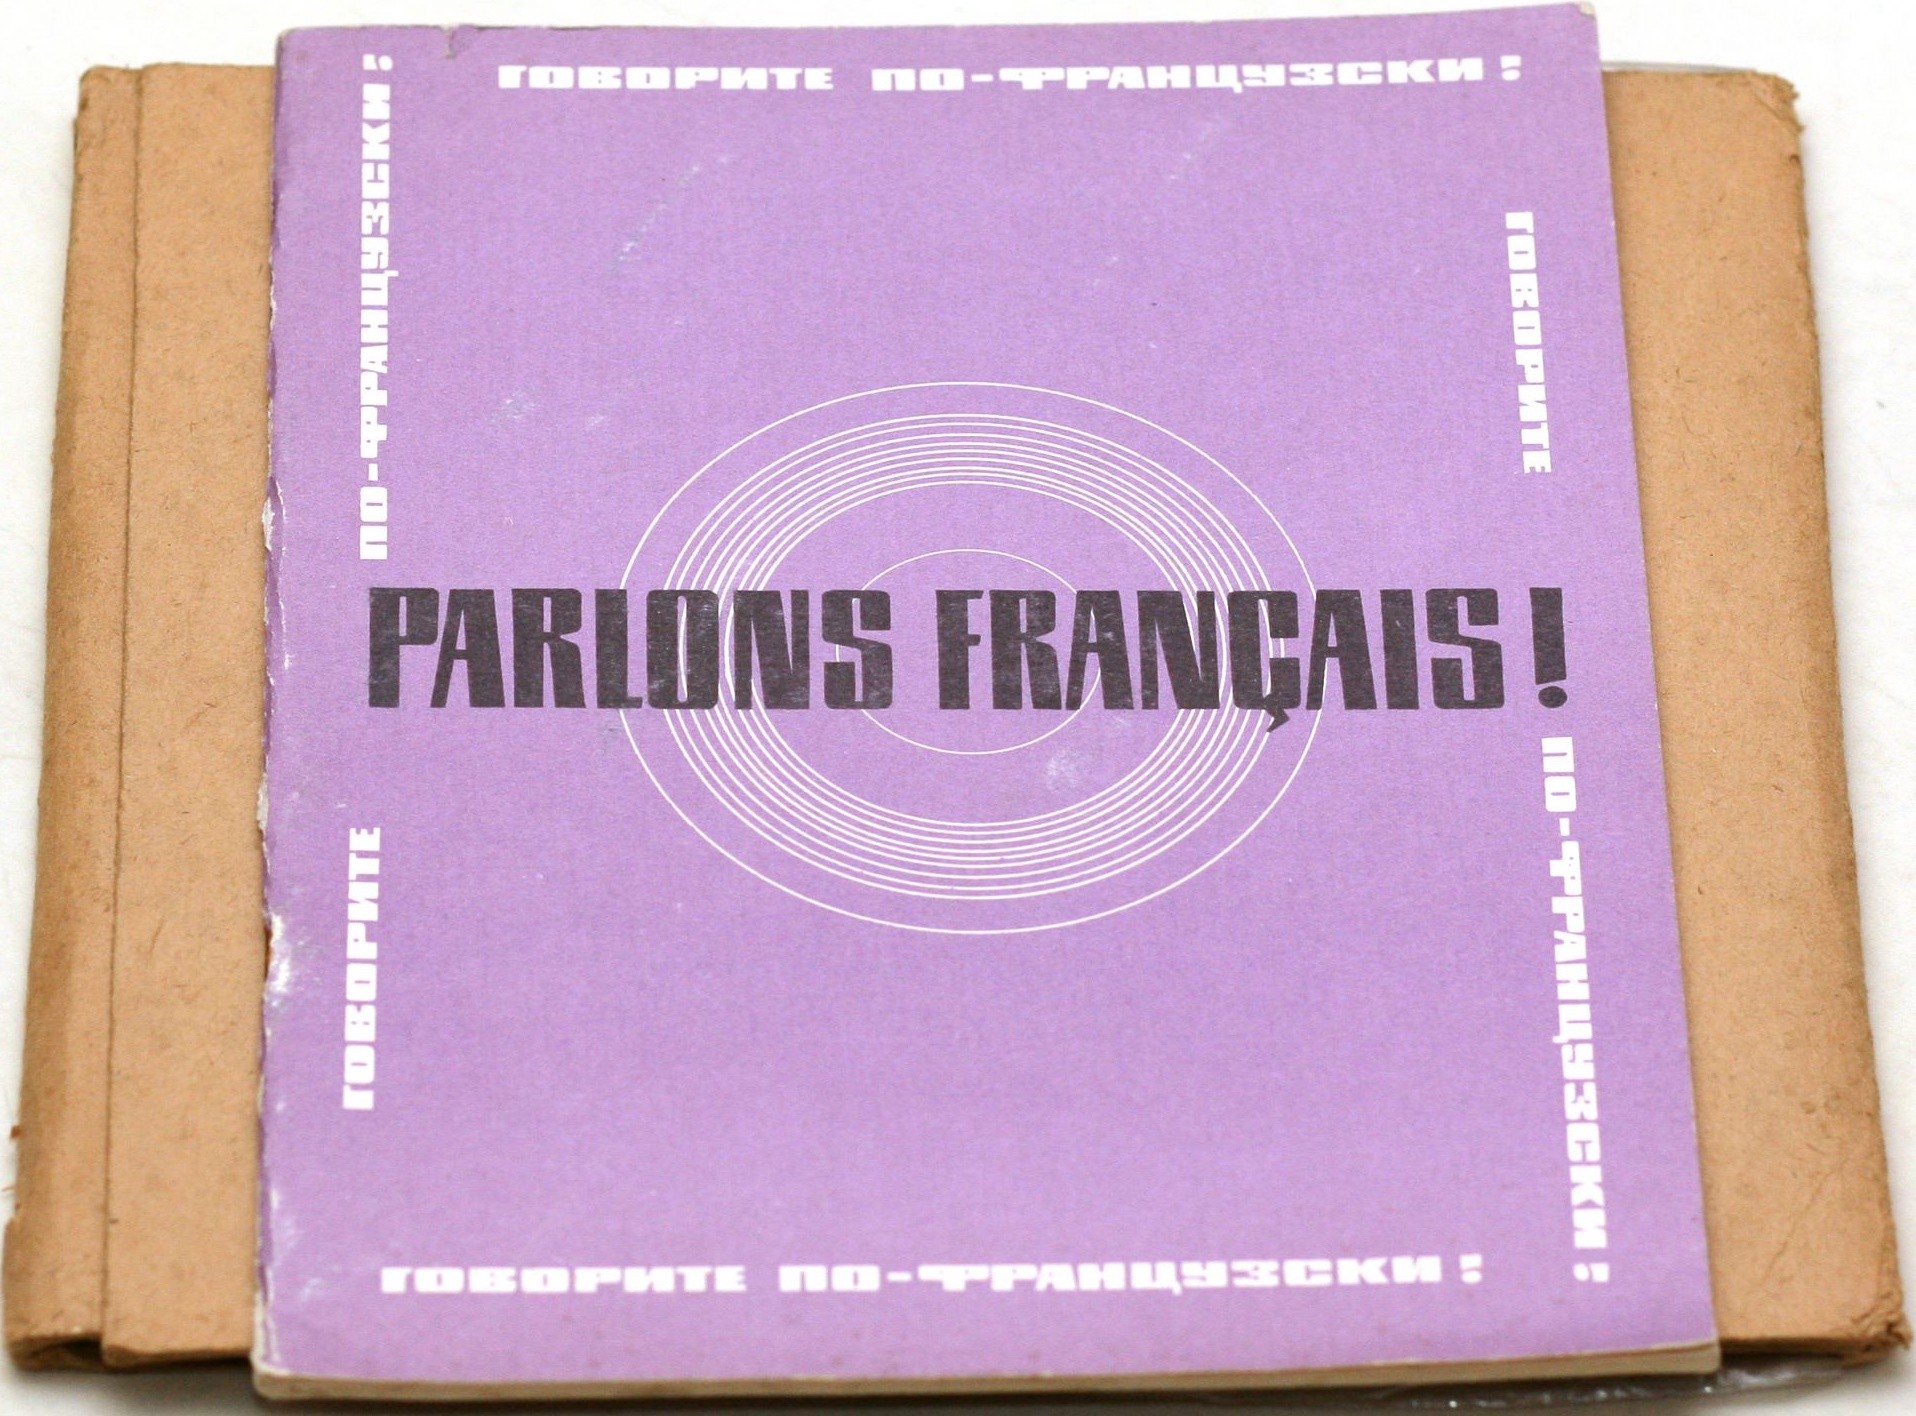 Говорите по-французски: тексты и диалоги из пособия "Французский разговорный язык"